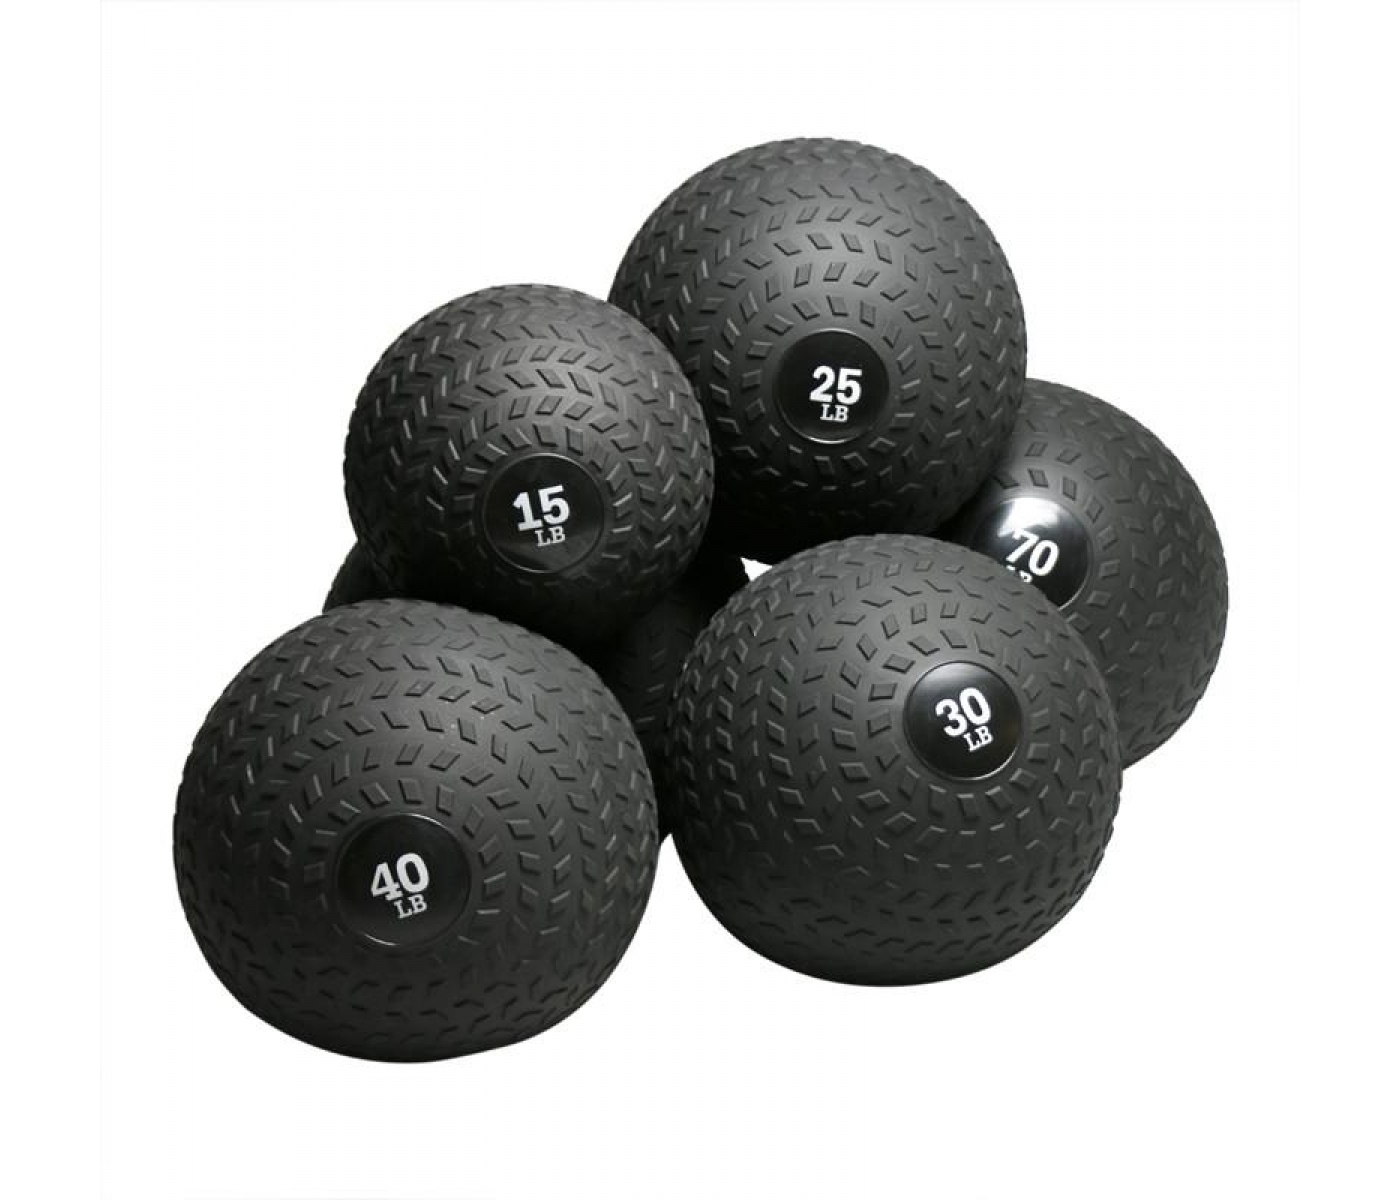 Billede af American Barbell Slam Ball 120 LBS (54,4 kg)